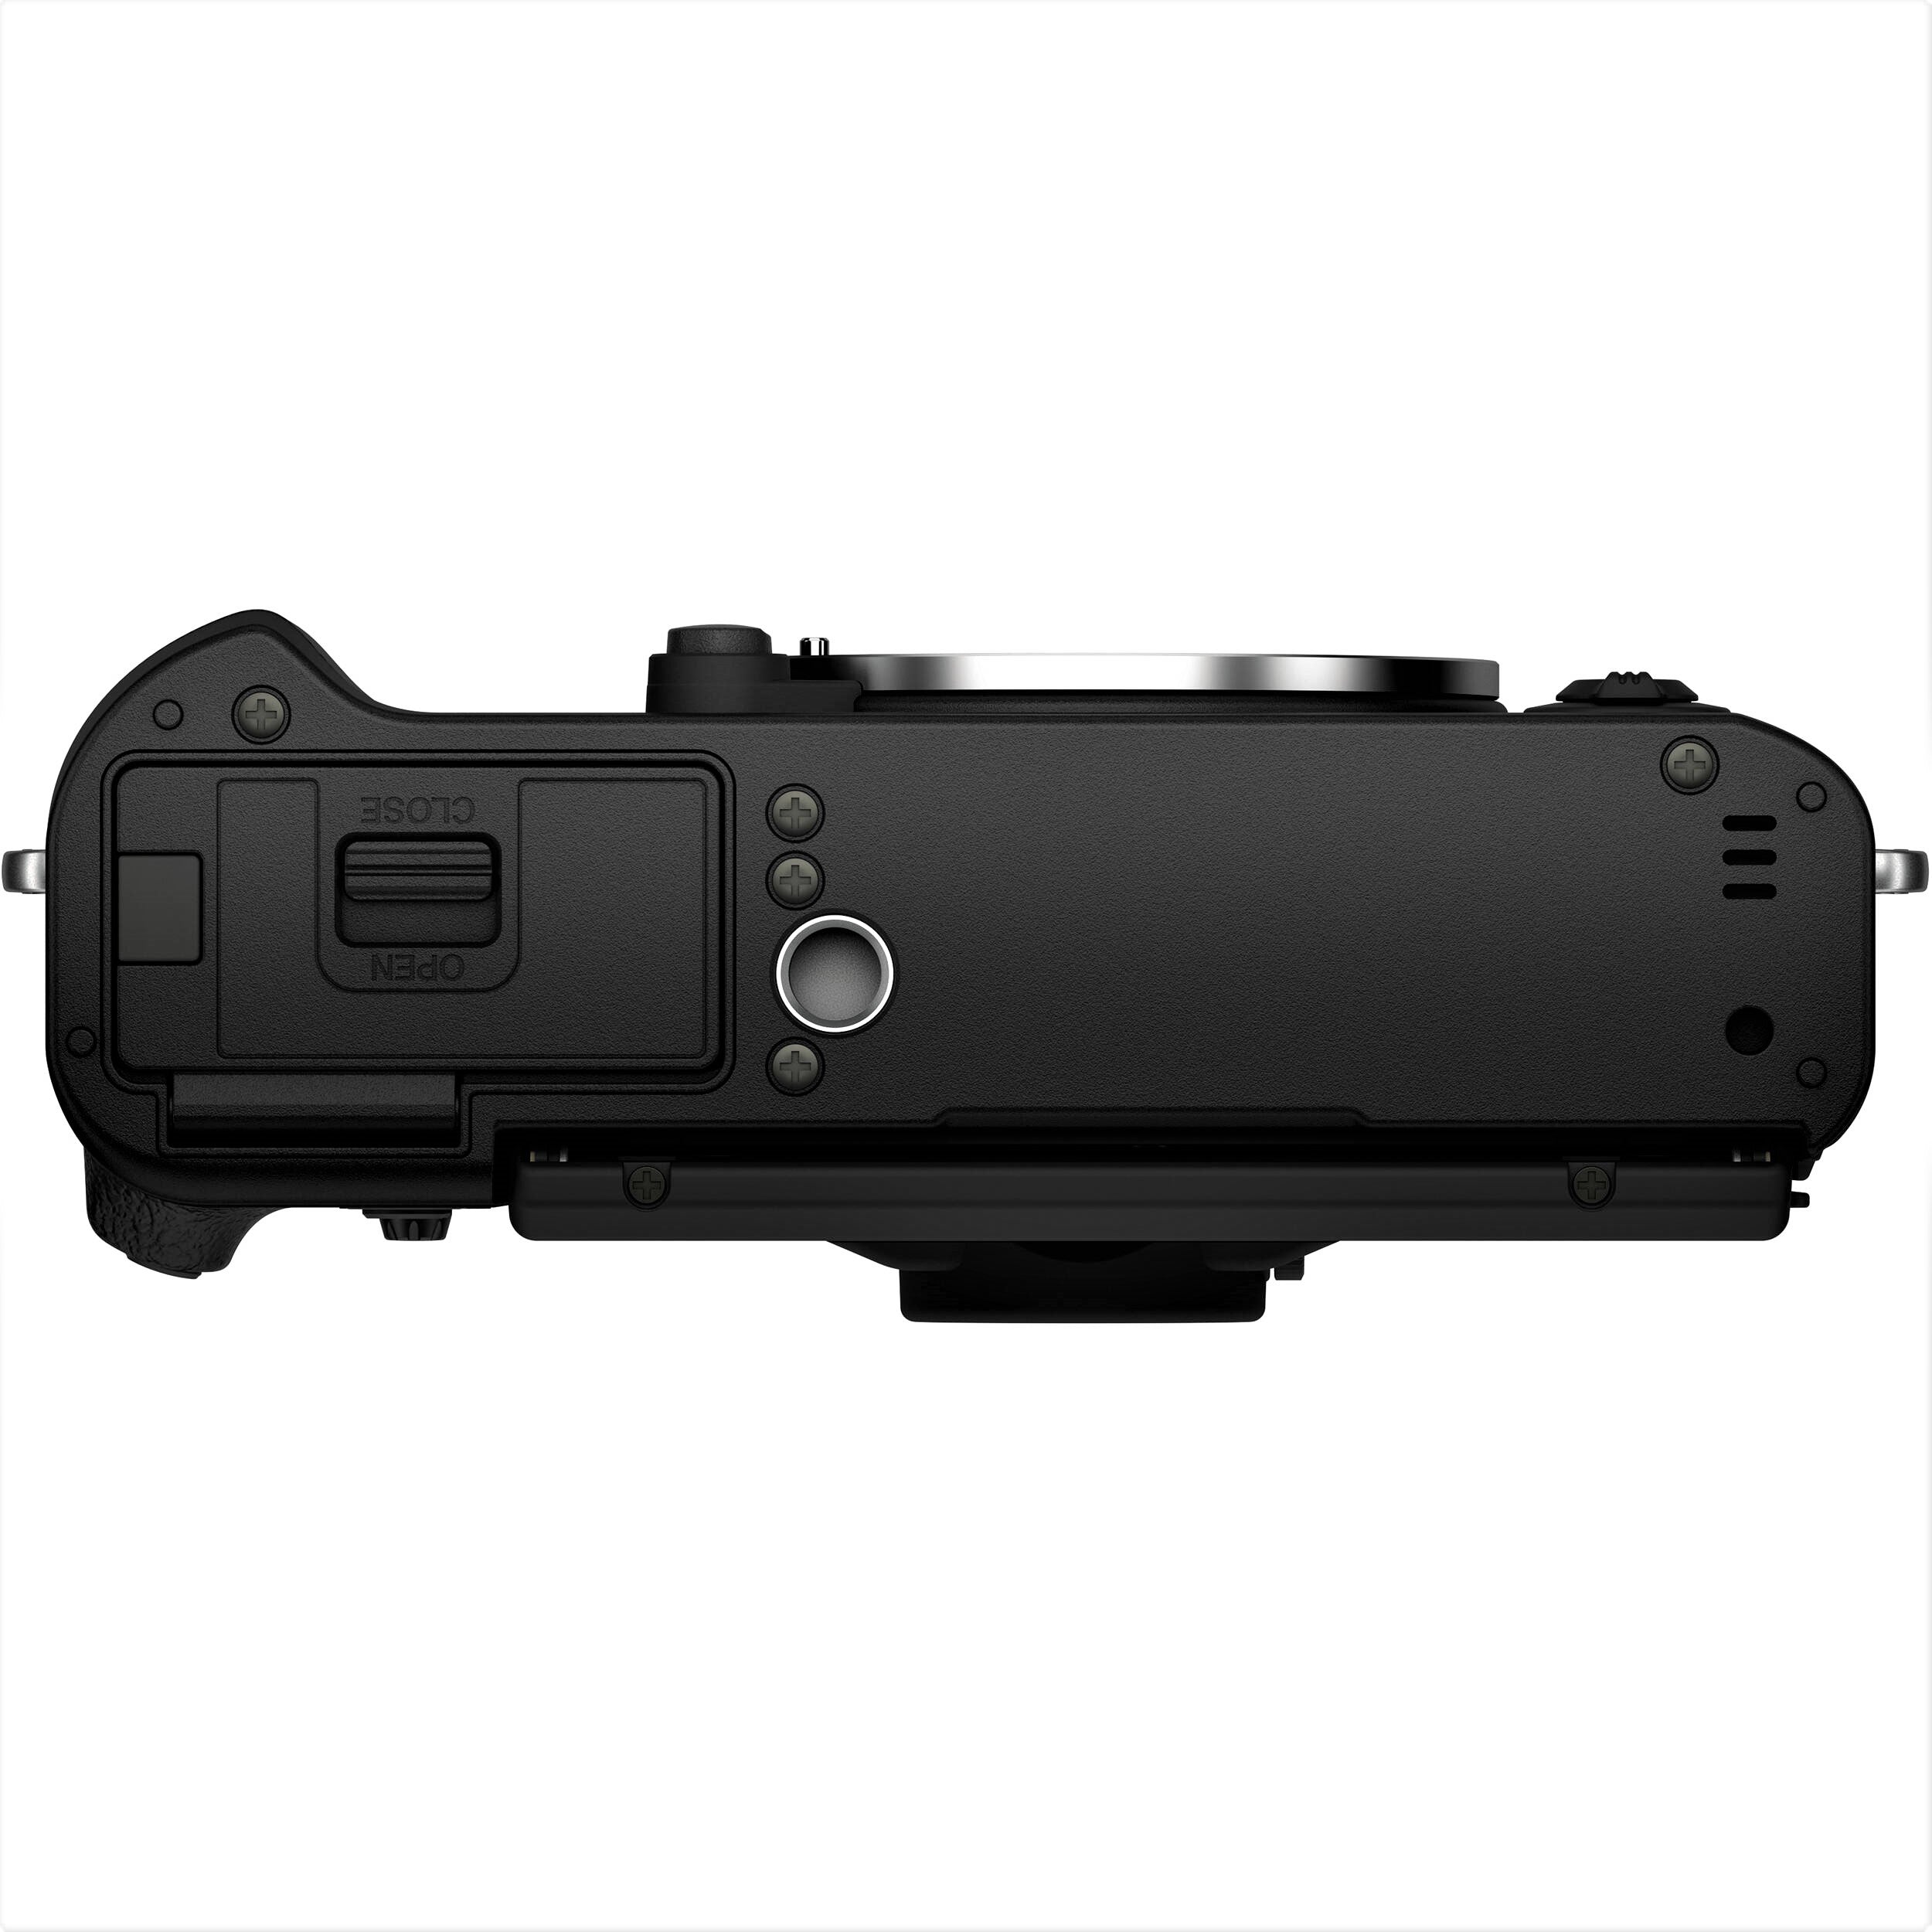 Fujifilm X-T30 II Mirrorless Camera with 18-55mm Lens (Black) - Bottom View